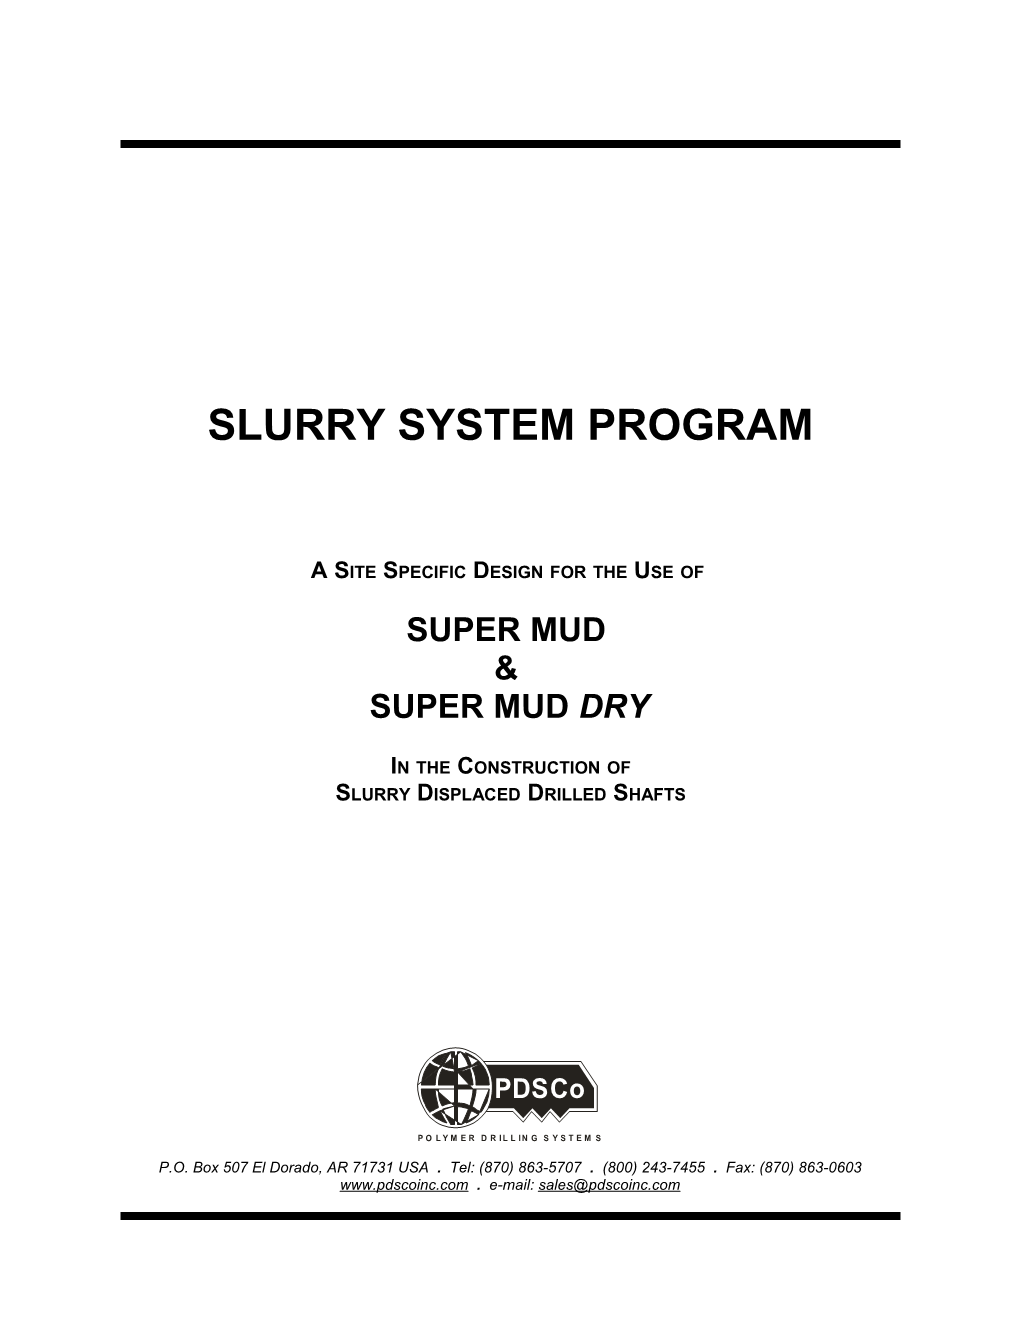 Slurry System Program